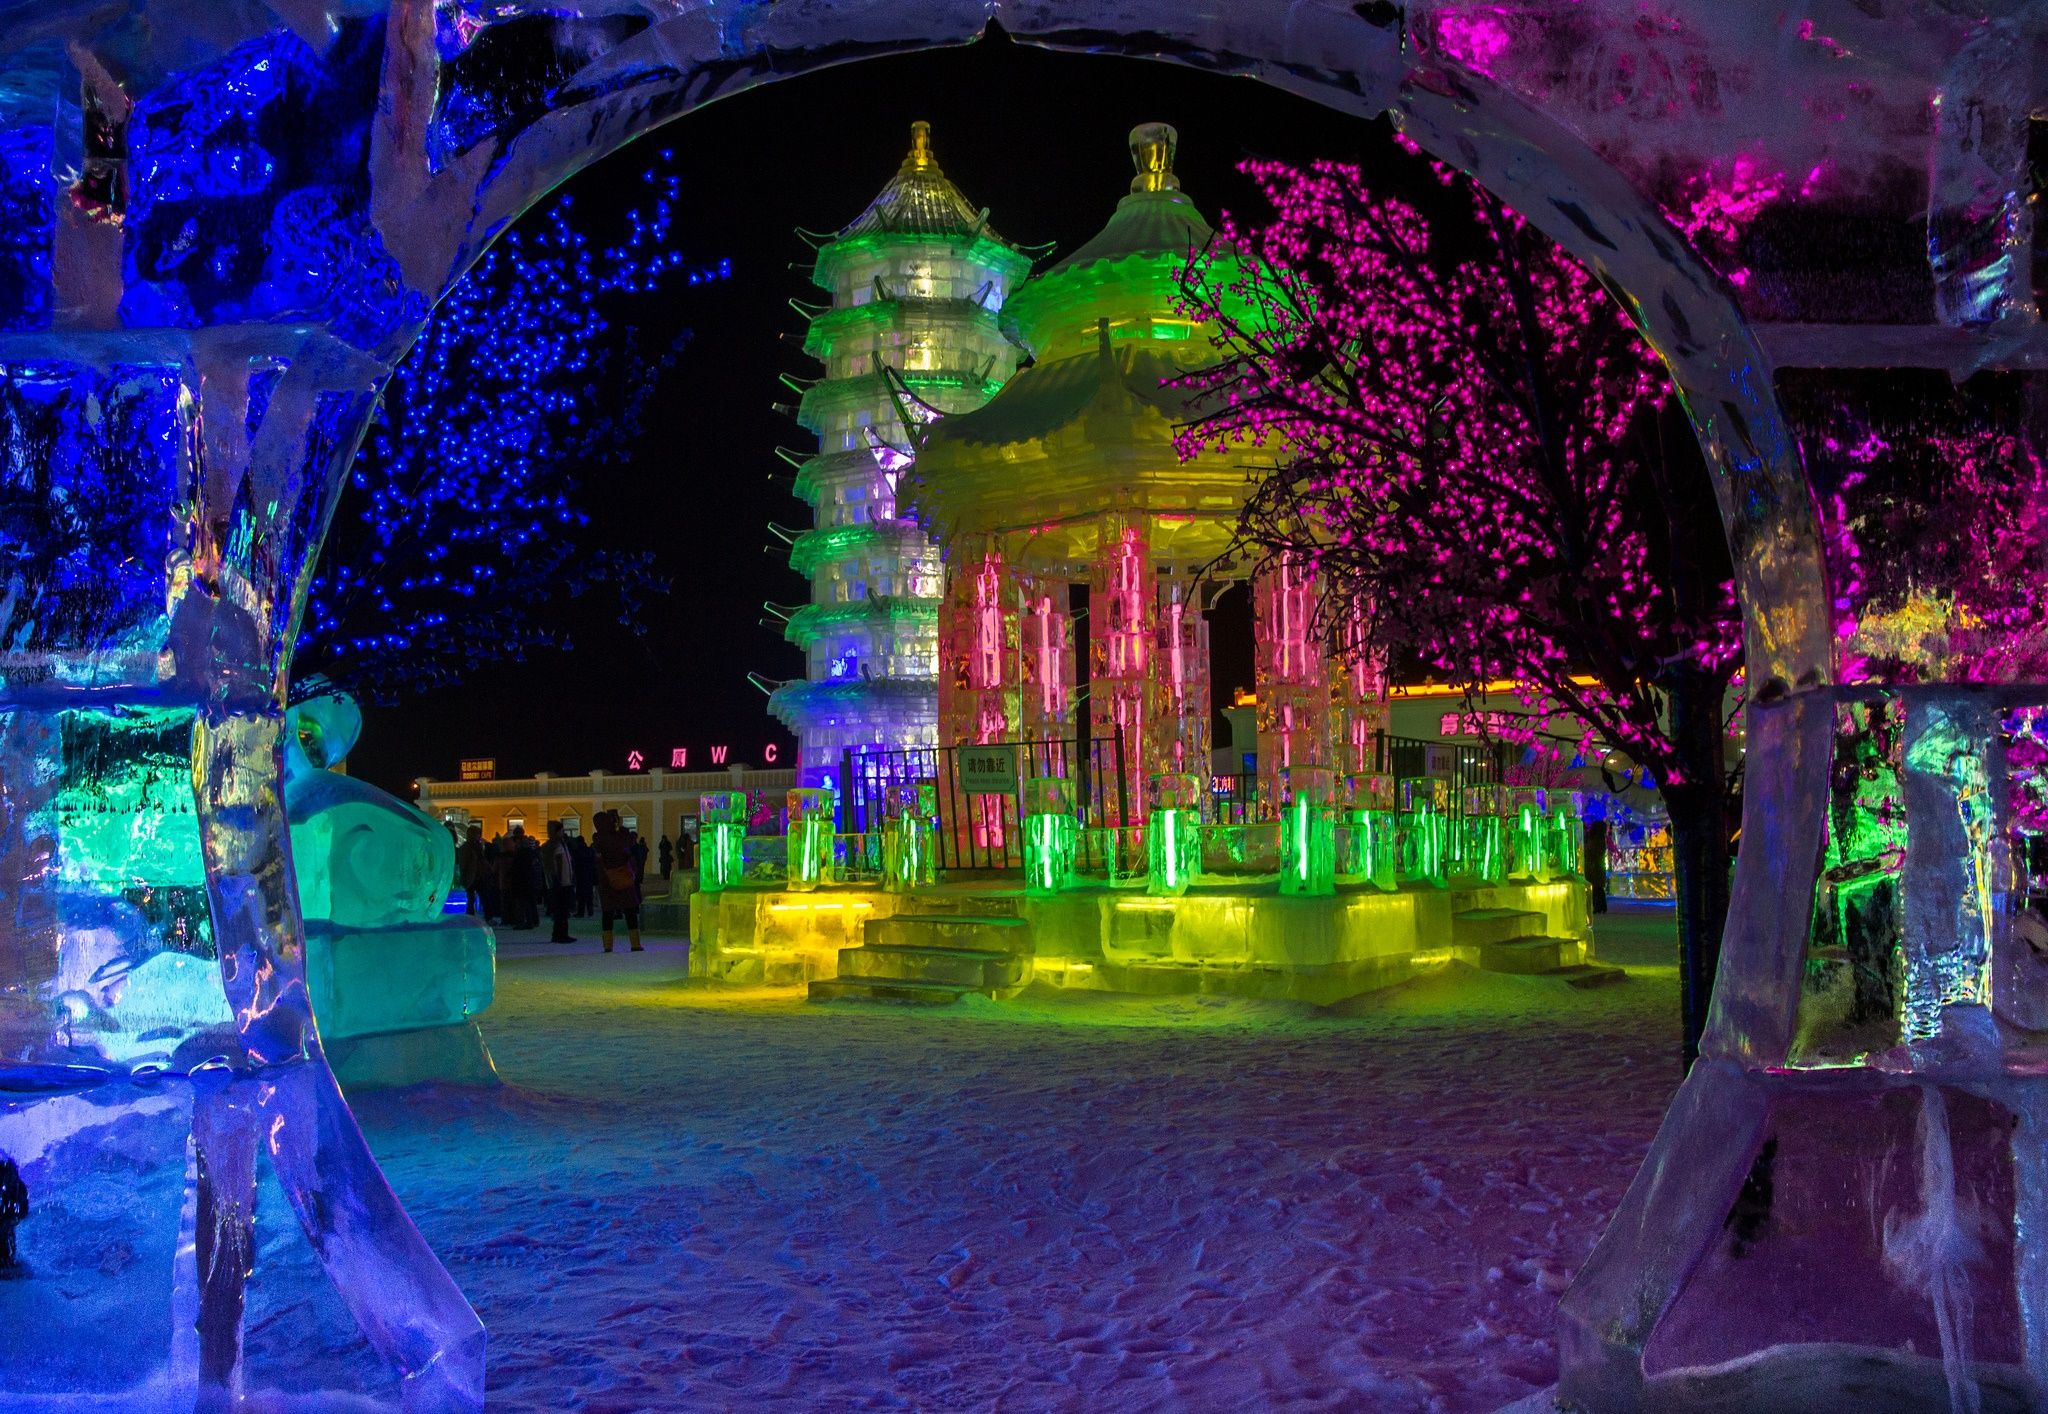 Splendid Ice Sculptures of the Harbin Ice Festival ⋆ Somewhere Luxurious